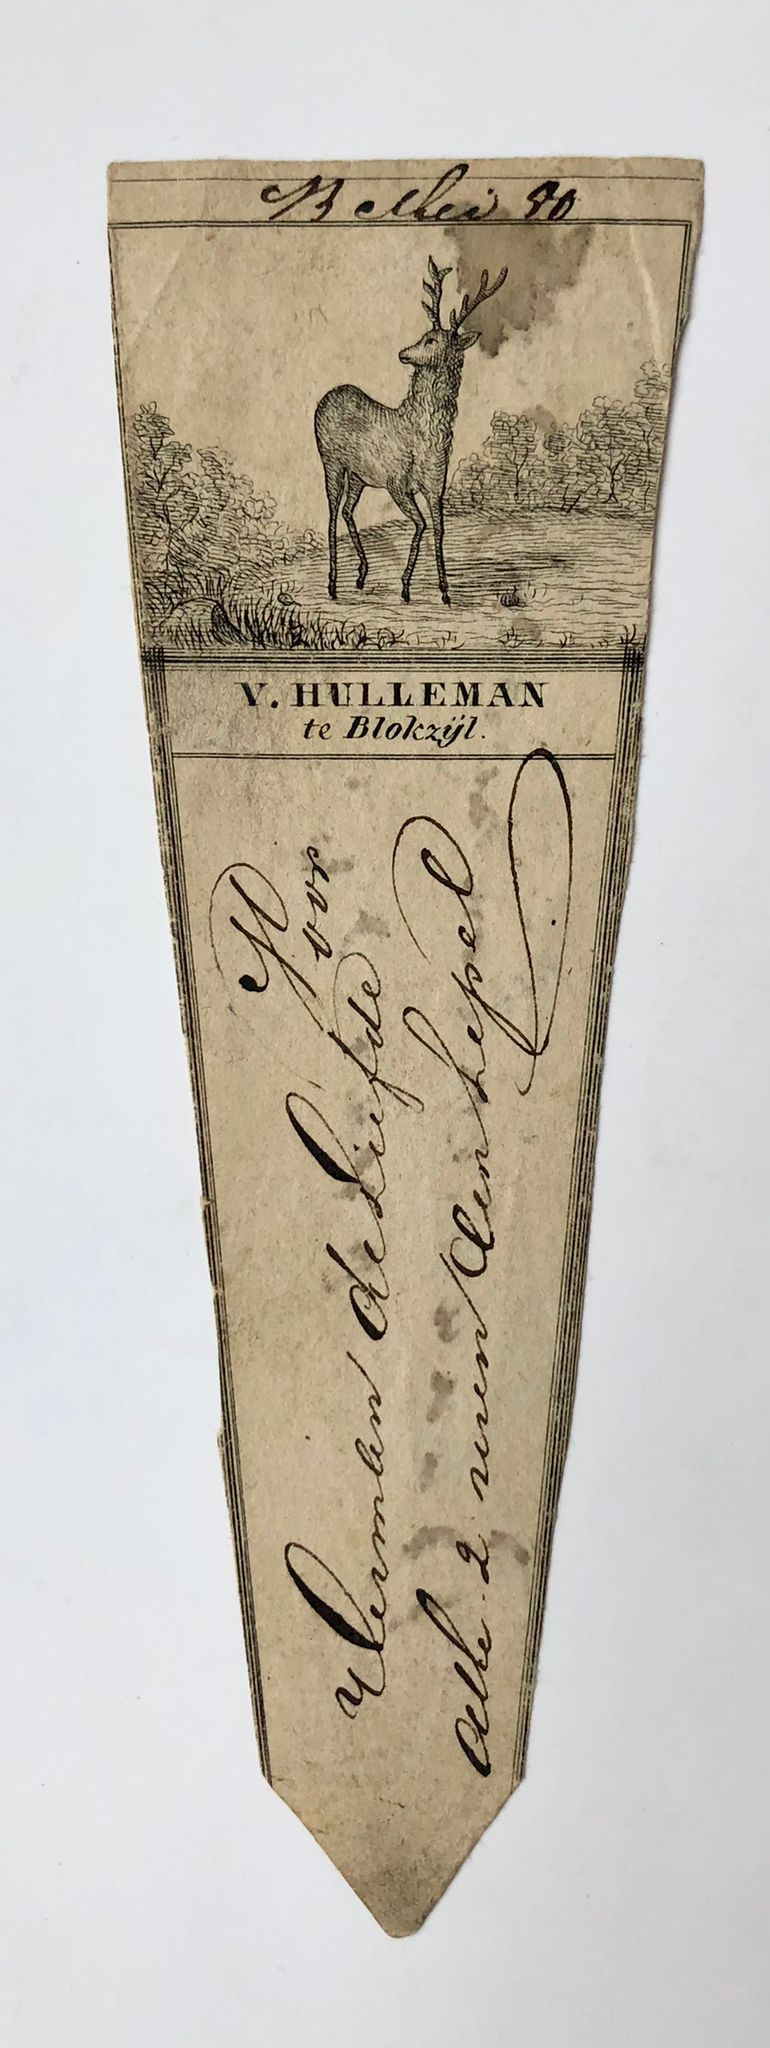 [Printed and partly manuscript, label for medicine, ca 1850] Label for medicine bottle, Printed by V. Hulleman, Blokzijl. In handwriting: 'voor Herman de Liefde', 1850. With engraving of deer (hert).